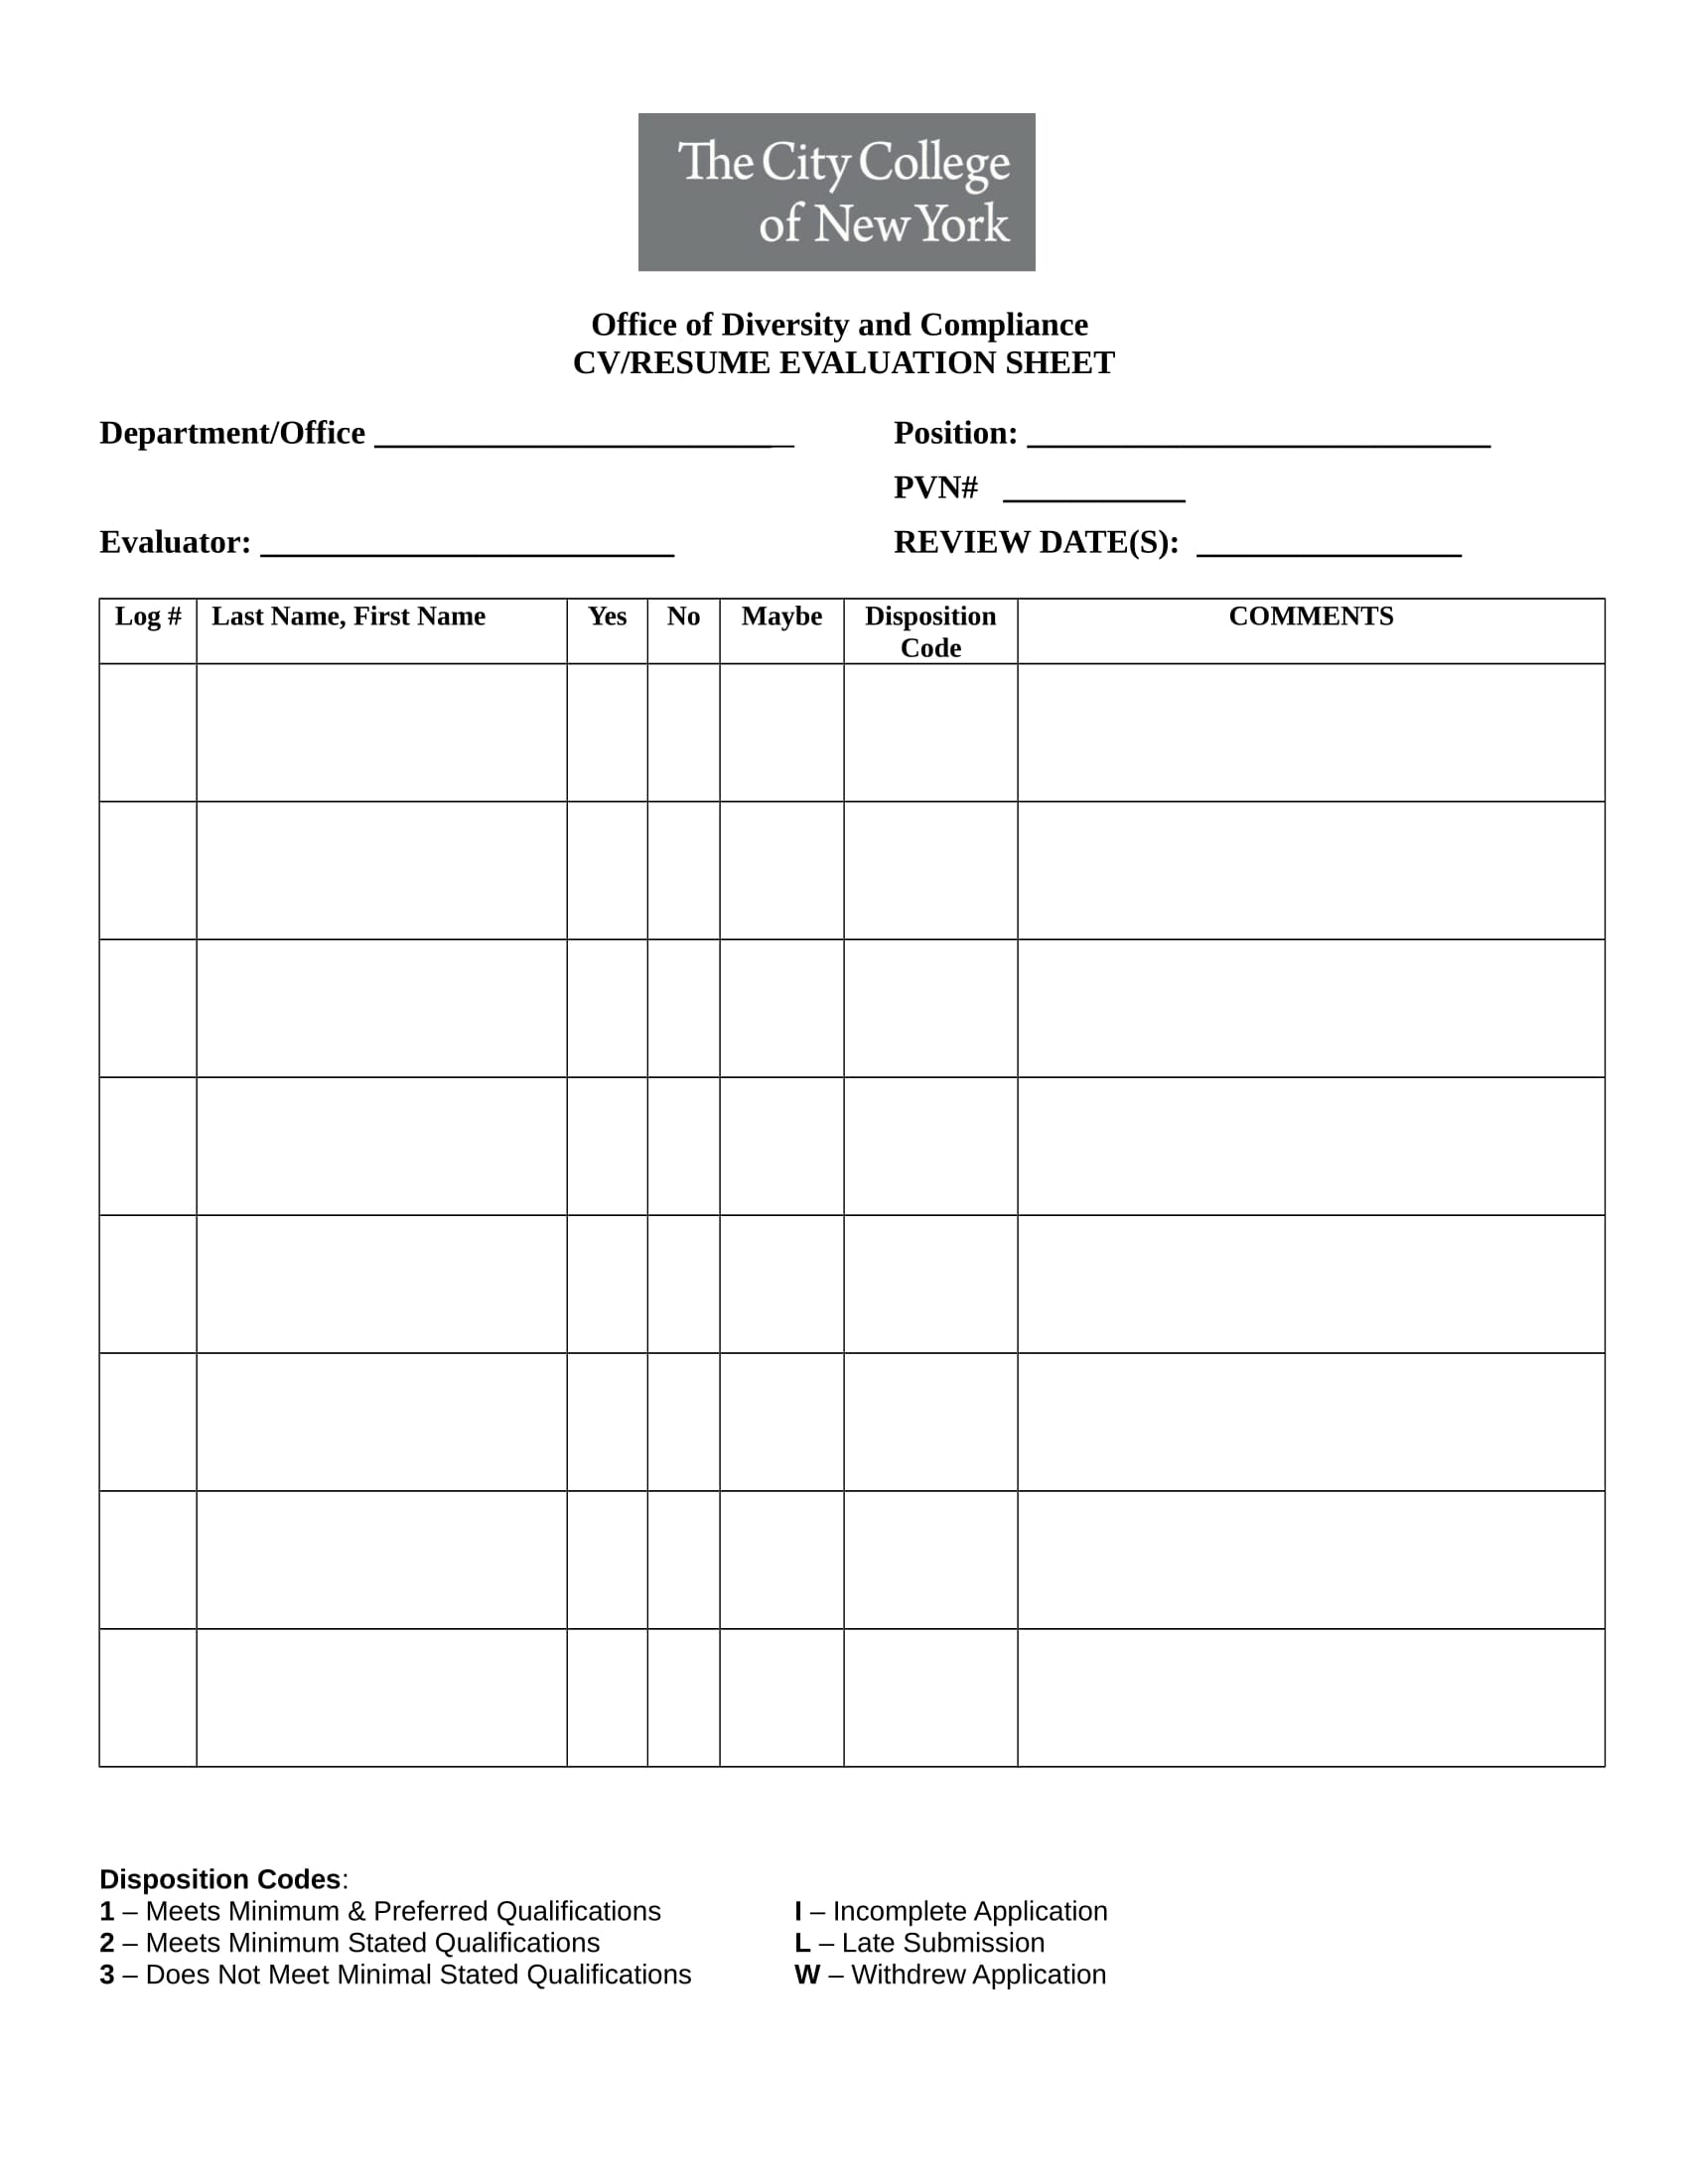 preliminary resume evaluation form 1